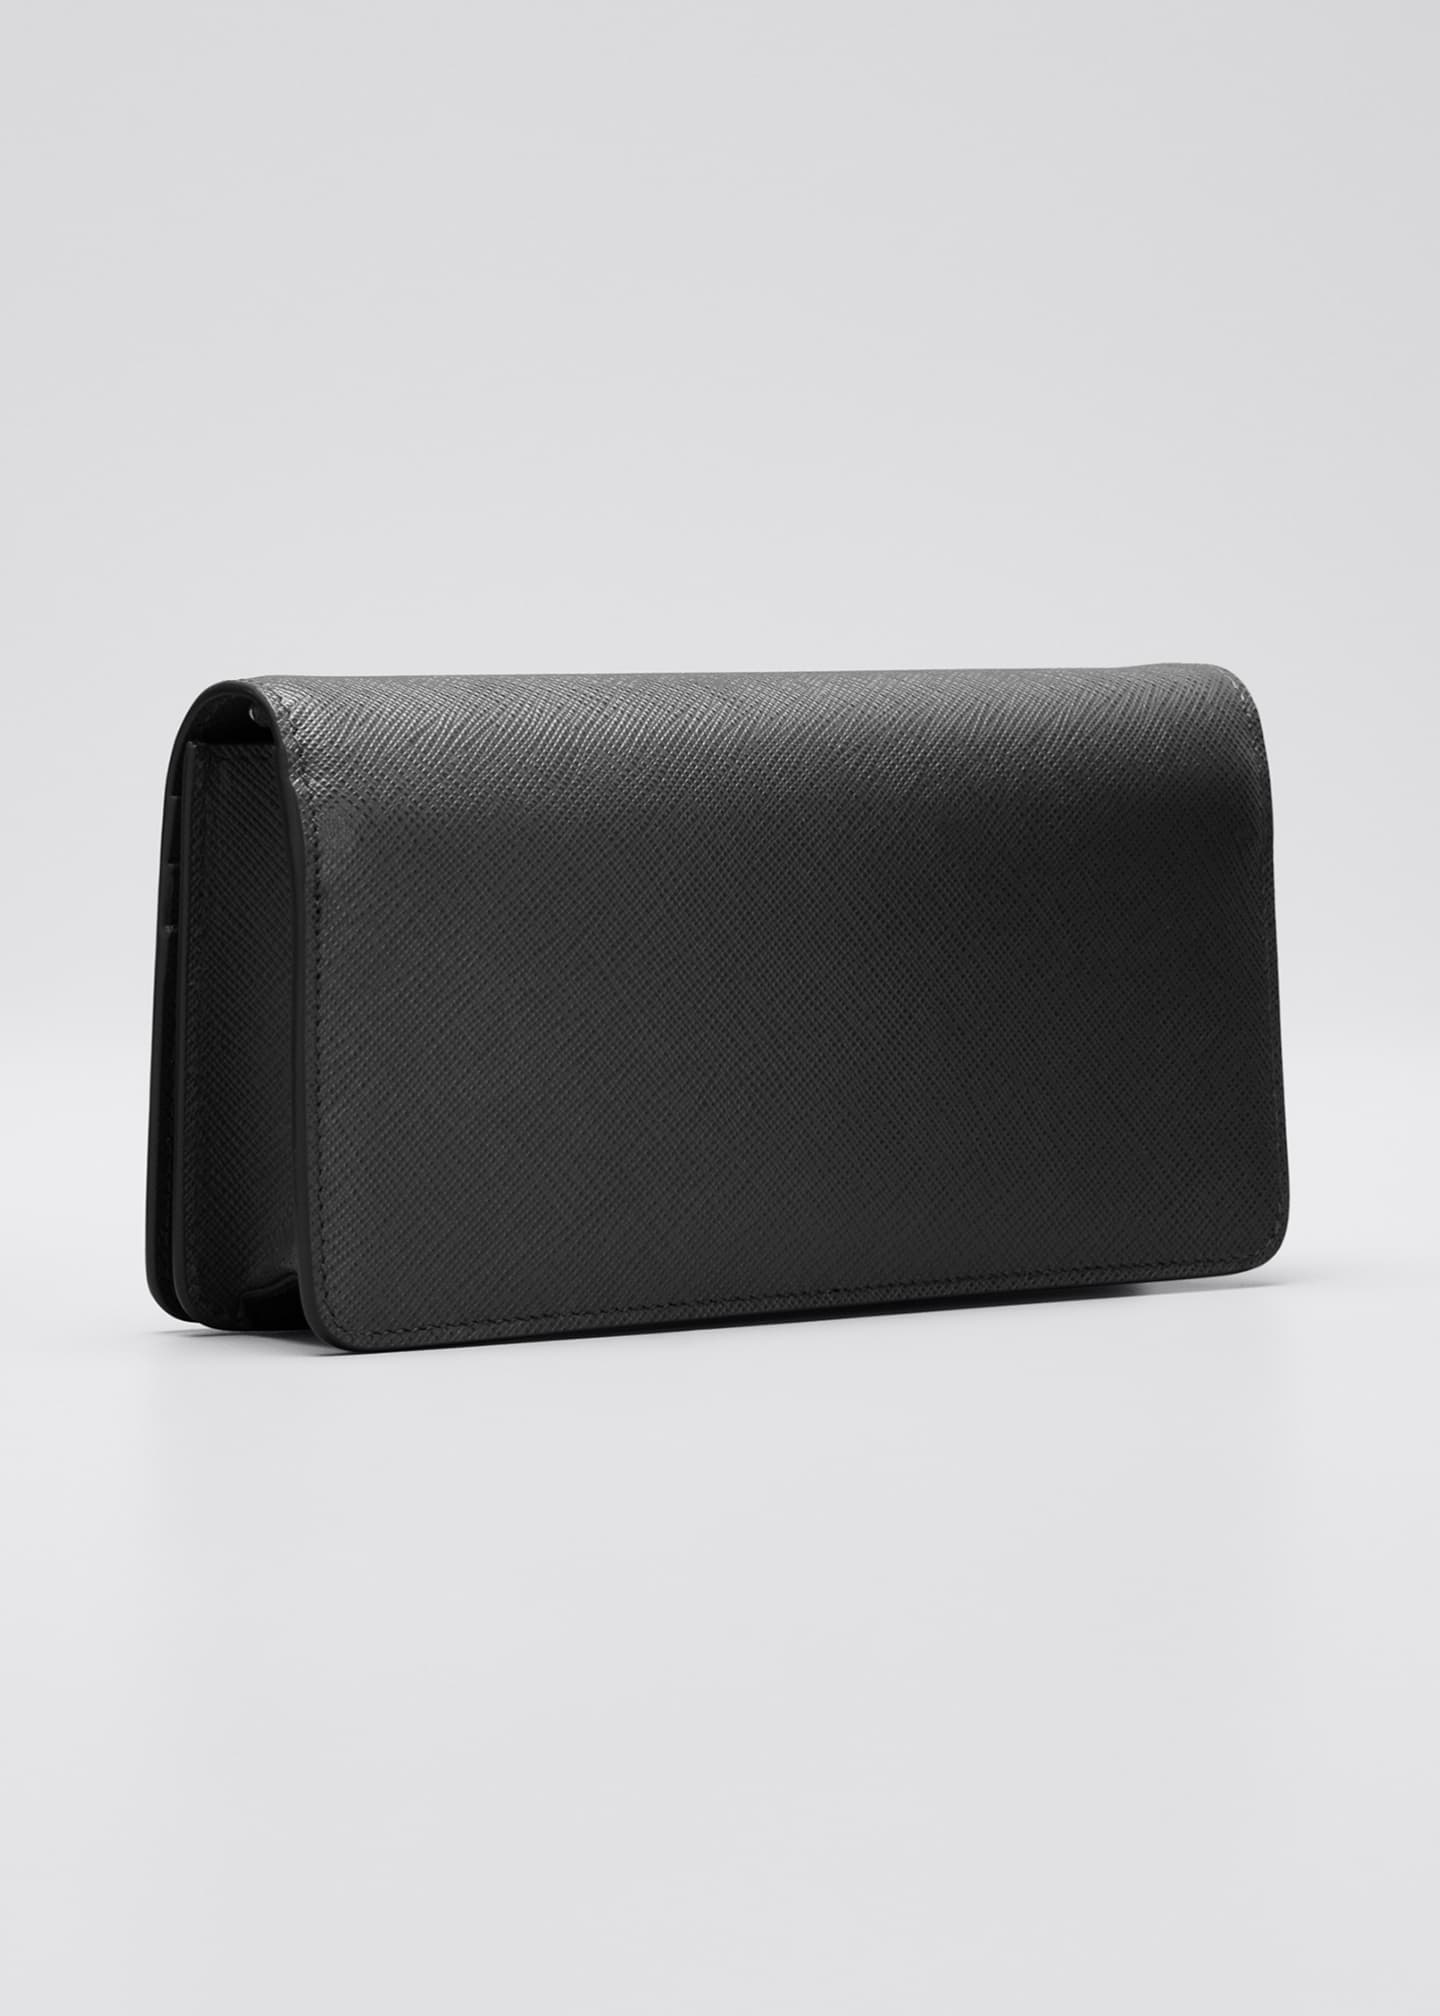 Prada Monochrome Mini Bag w/ Removable Wristlet and Crossbody Straps - Bergdorf Goodman